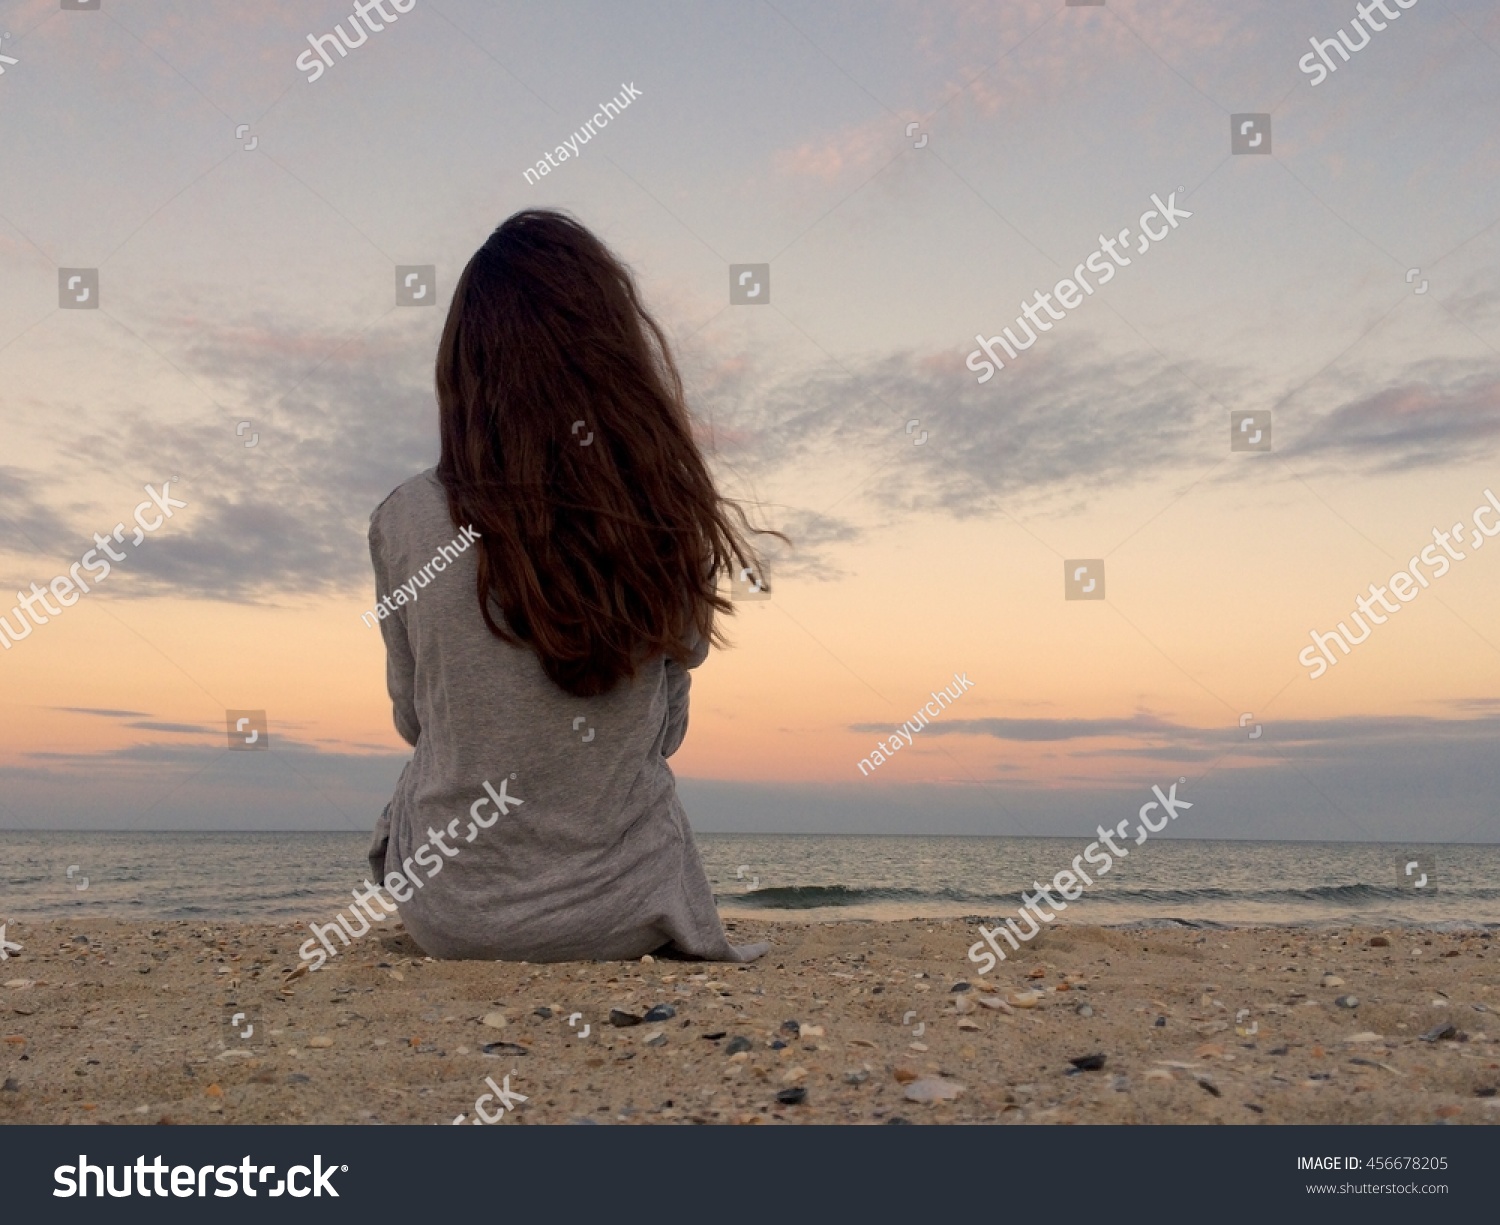 Lonely Girl On Beach Stock Photo 456678205 - Shutterstock-7753